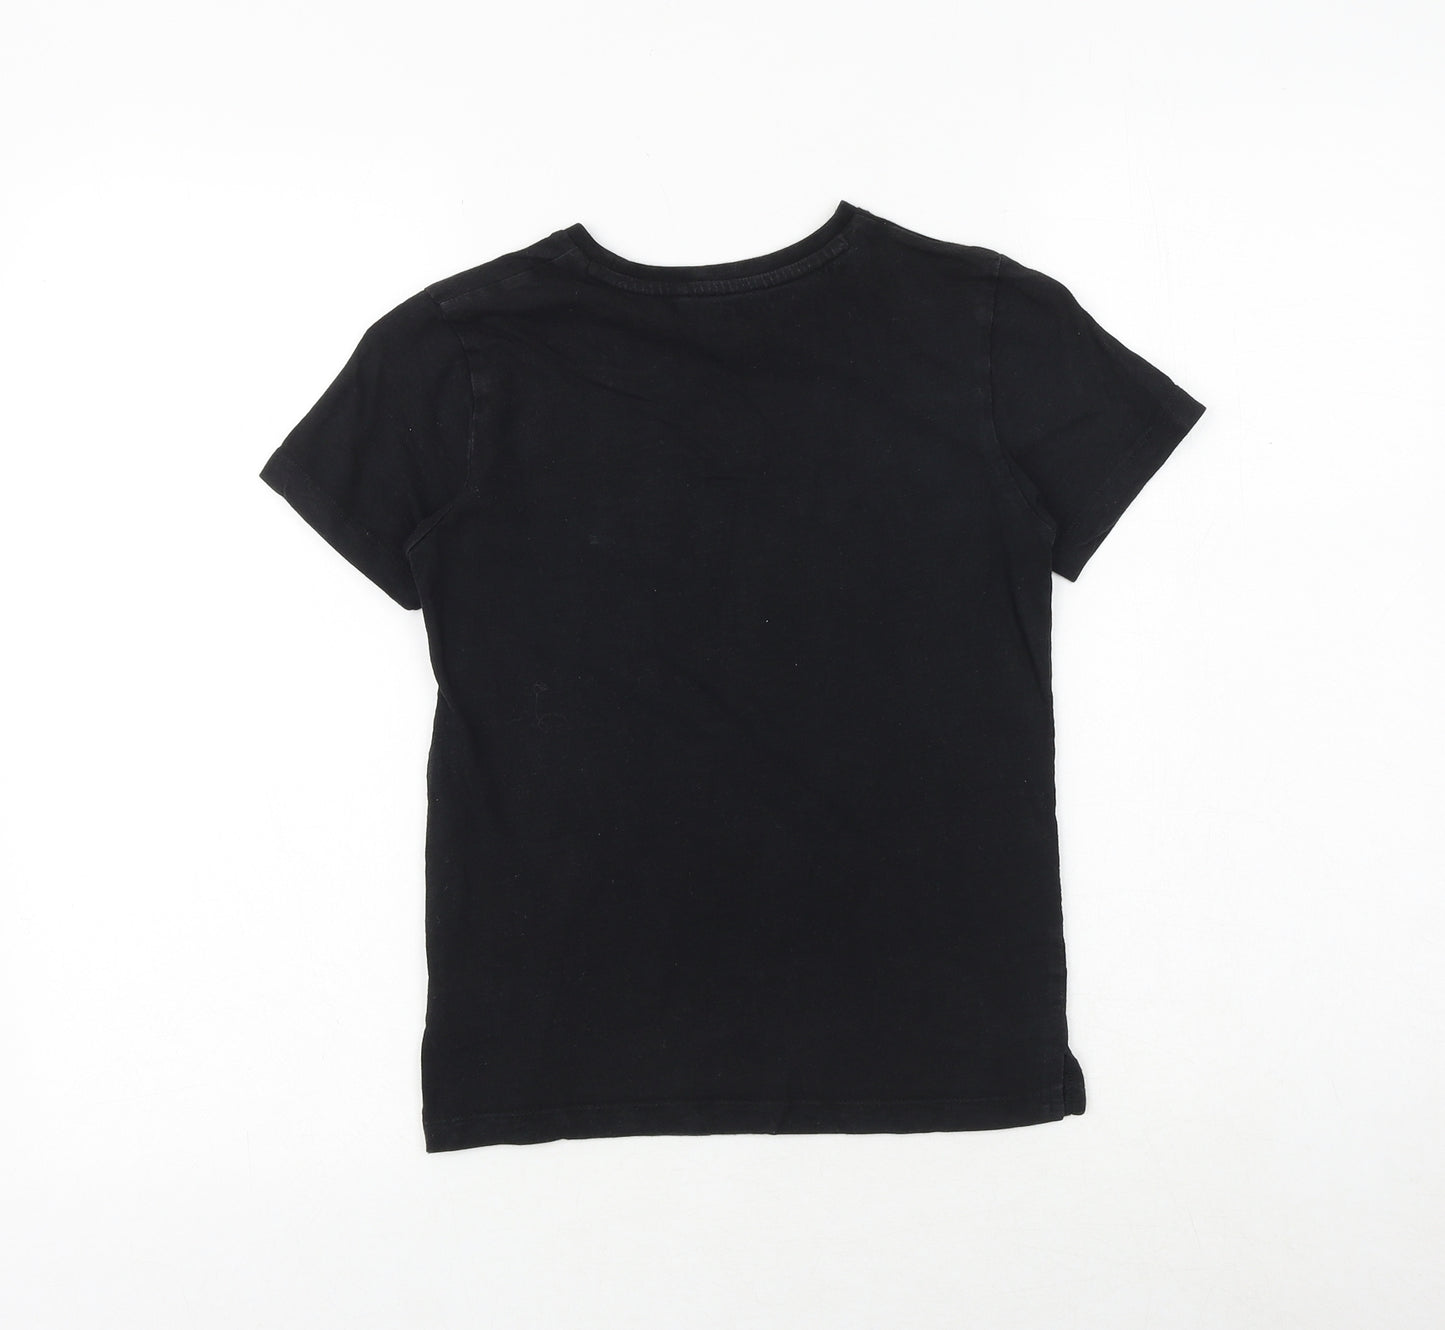 NEXT Boys Black 100% Cotton Basic T-Shirt Size 7 Years Round Neck Pullover - VIP